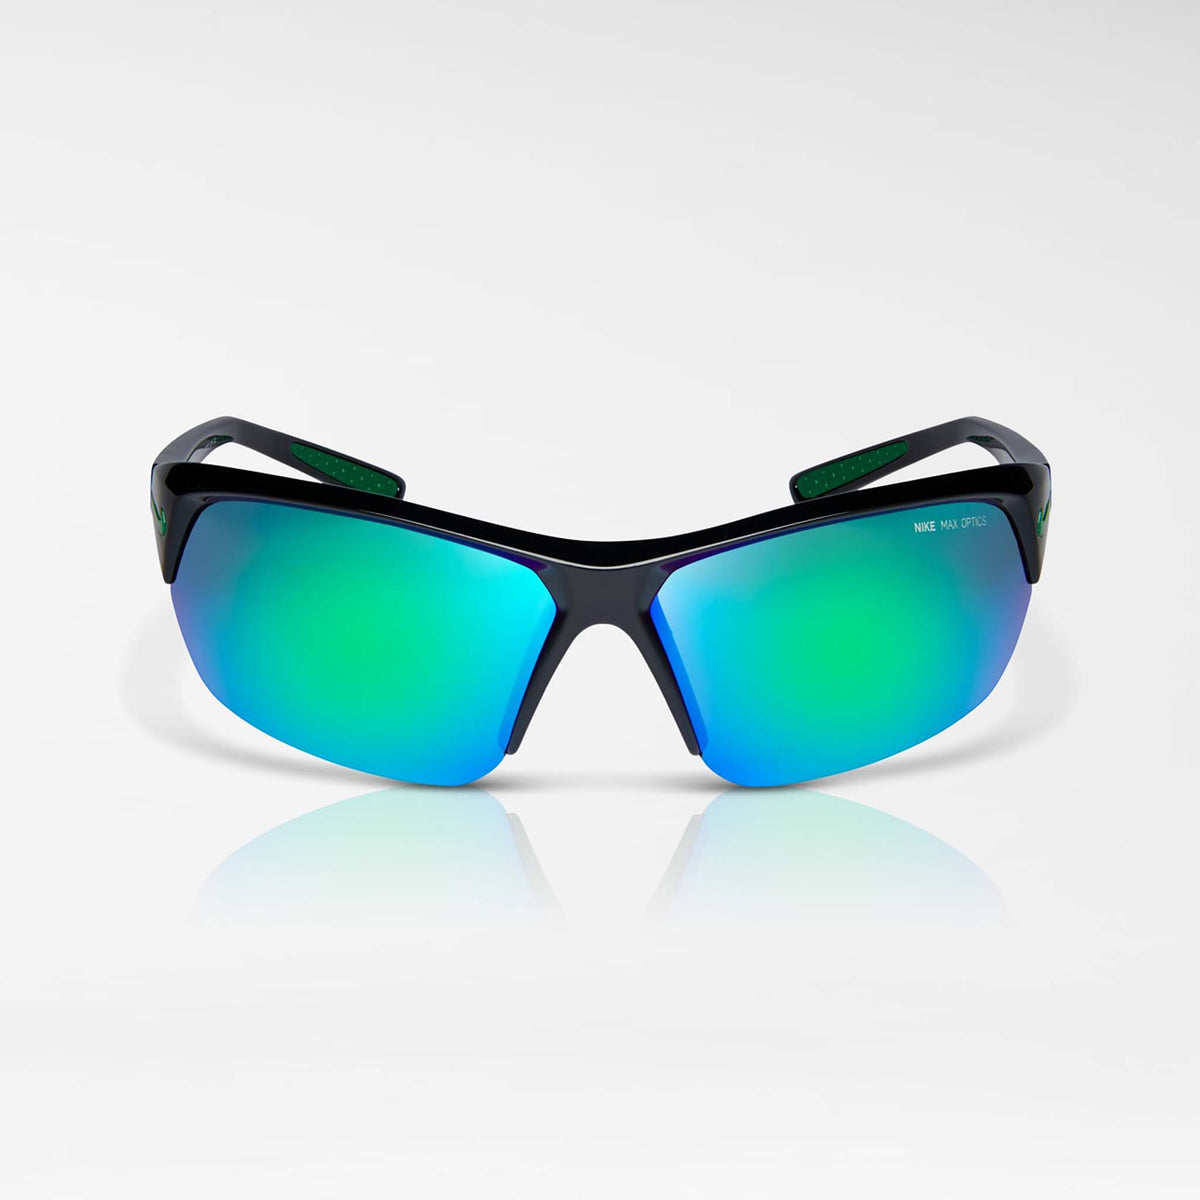 Nike Skylon Ace lunettes de soleil sport noir vert miroir face